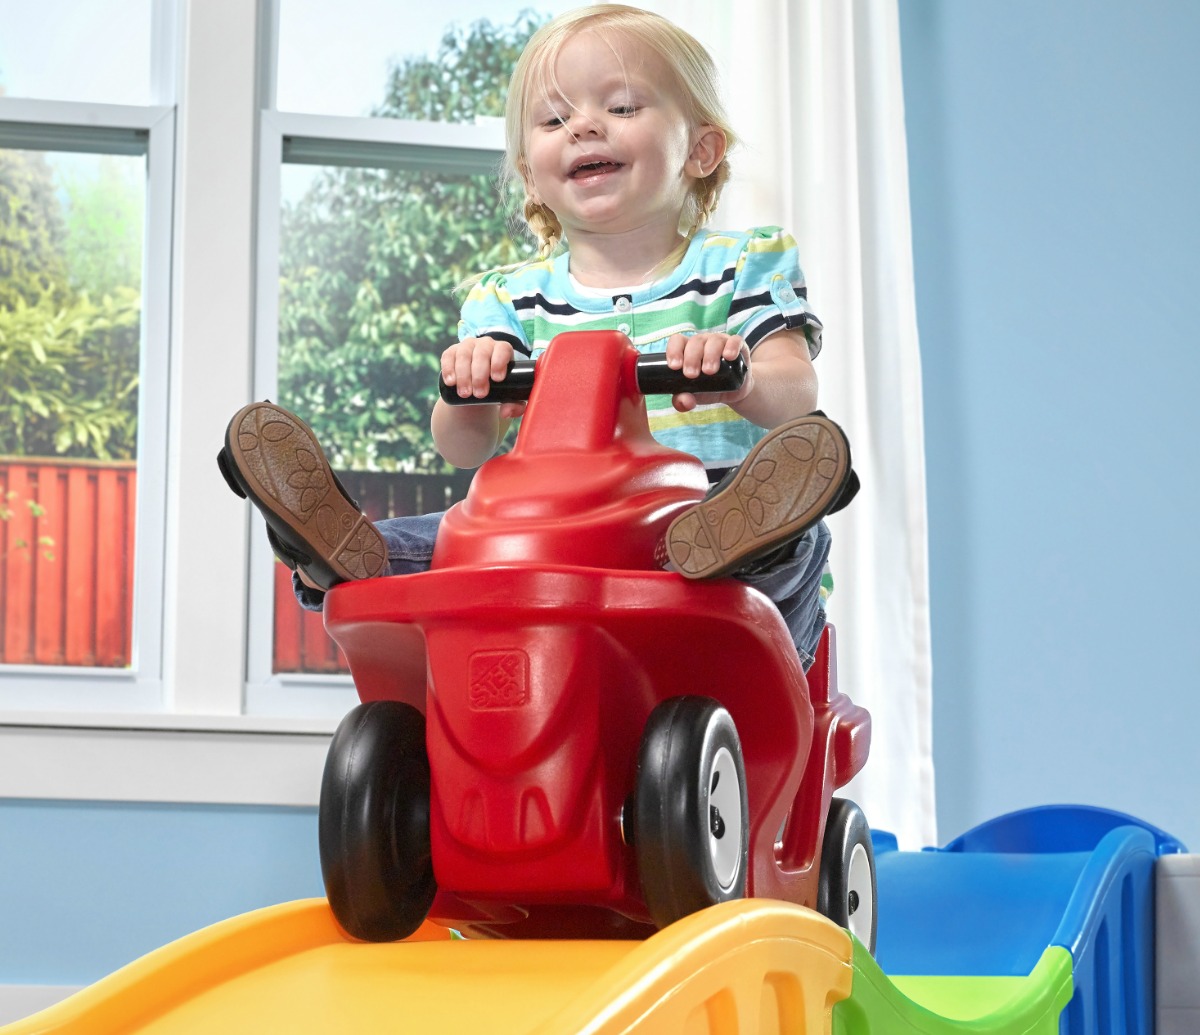 Toddler boy joyfully riding a red roller coast toy